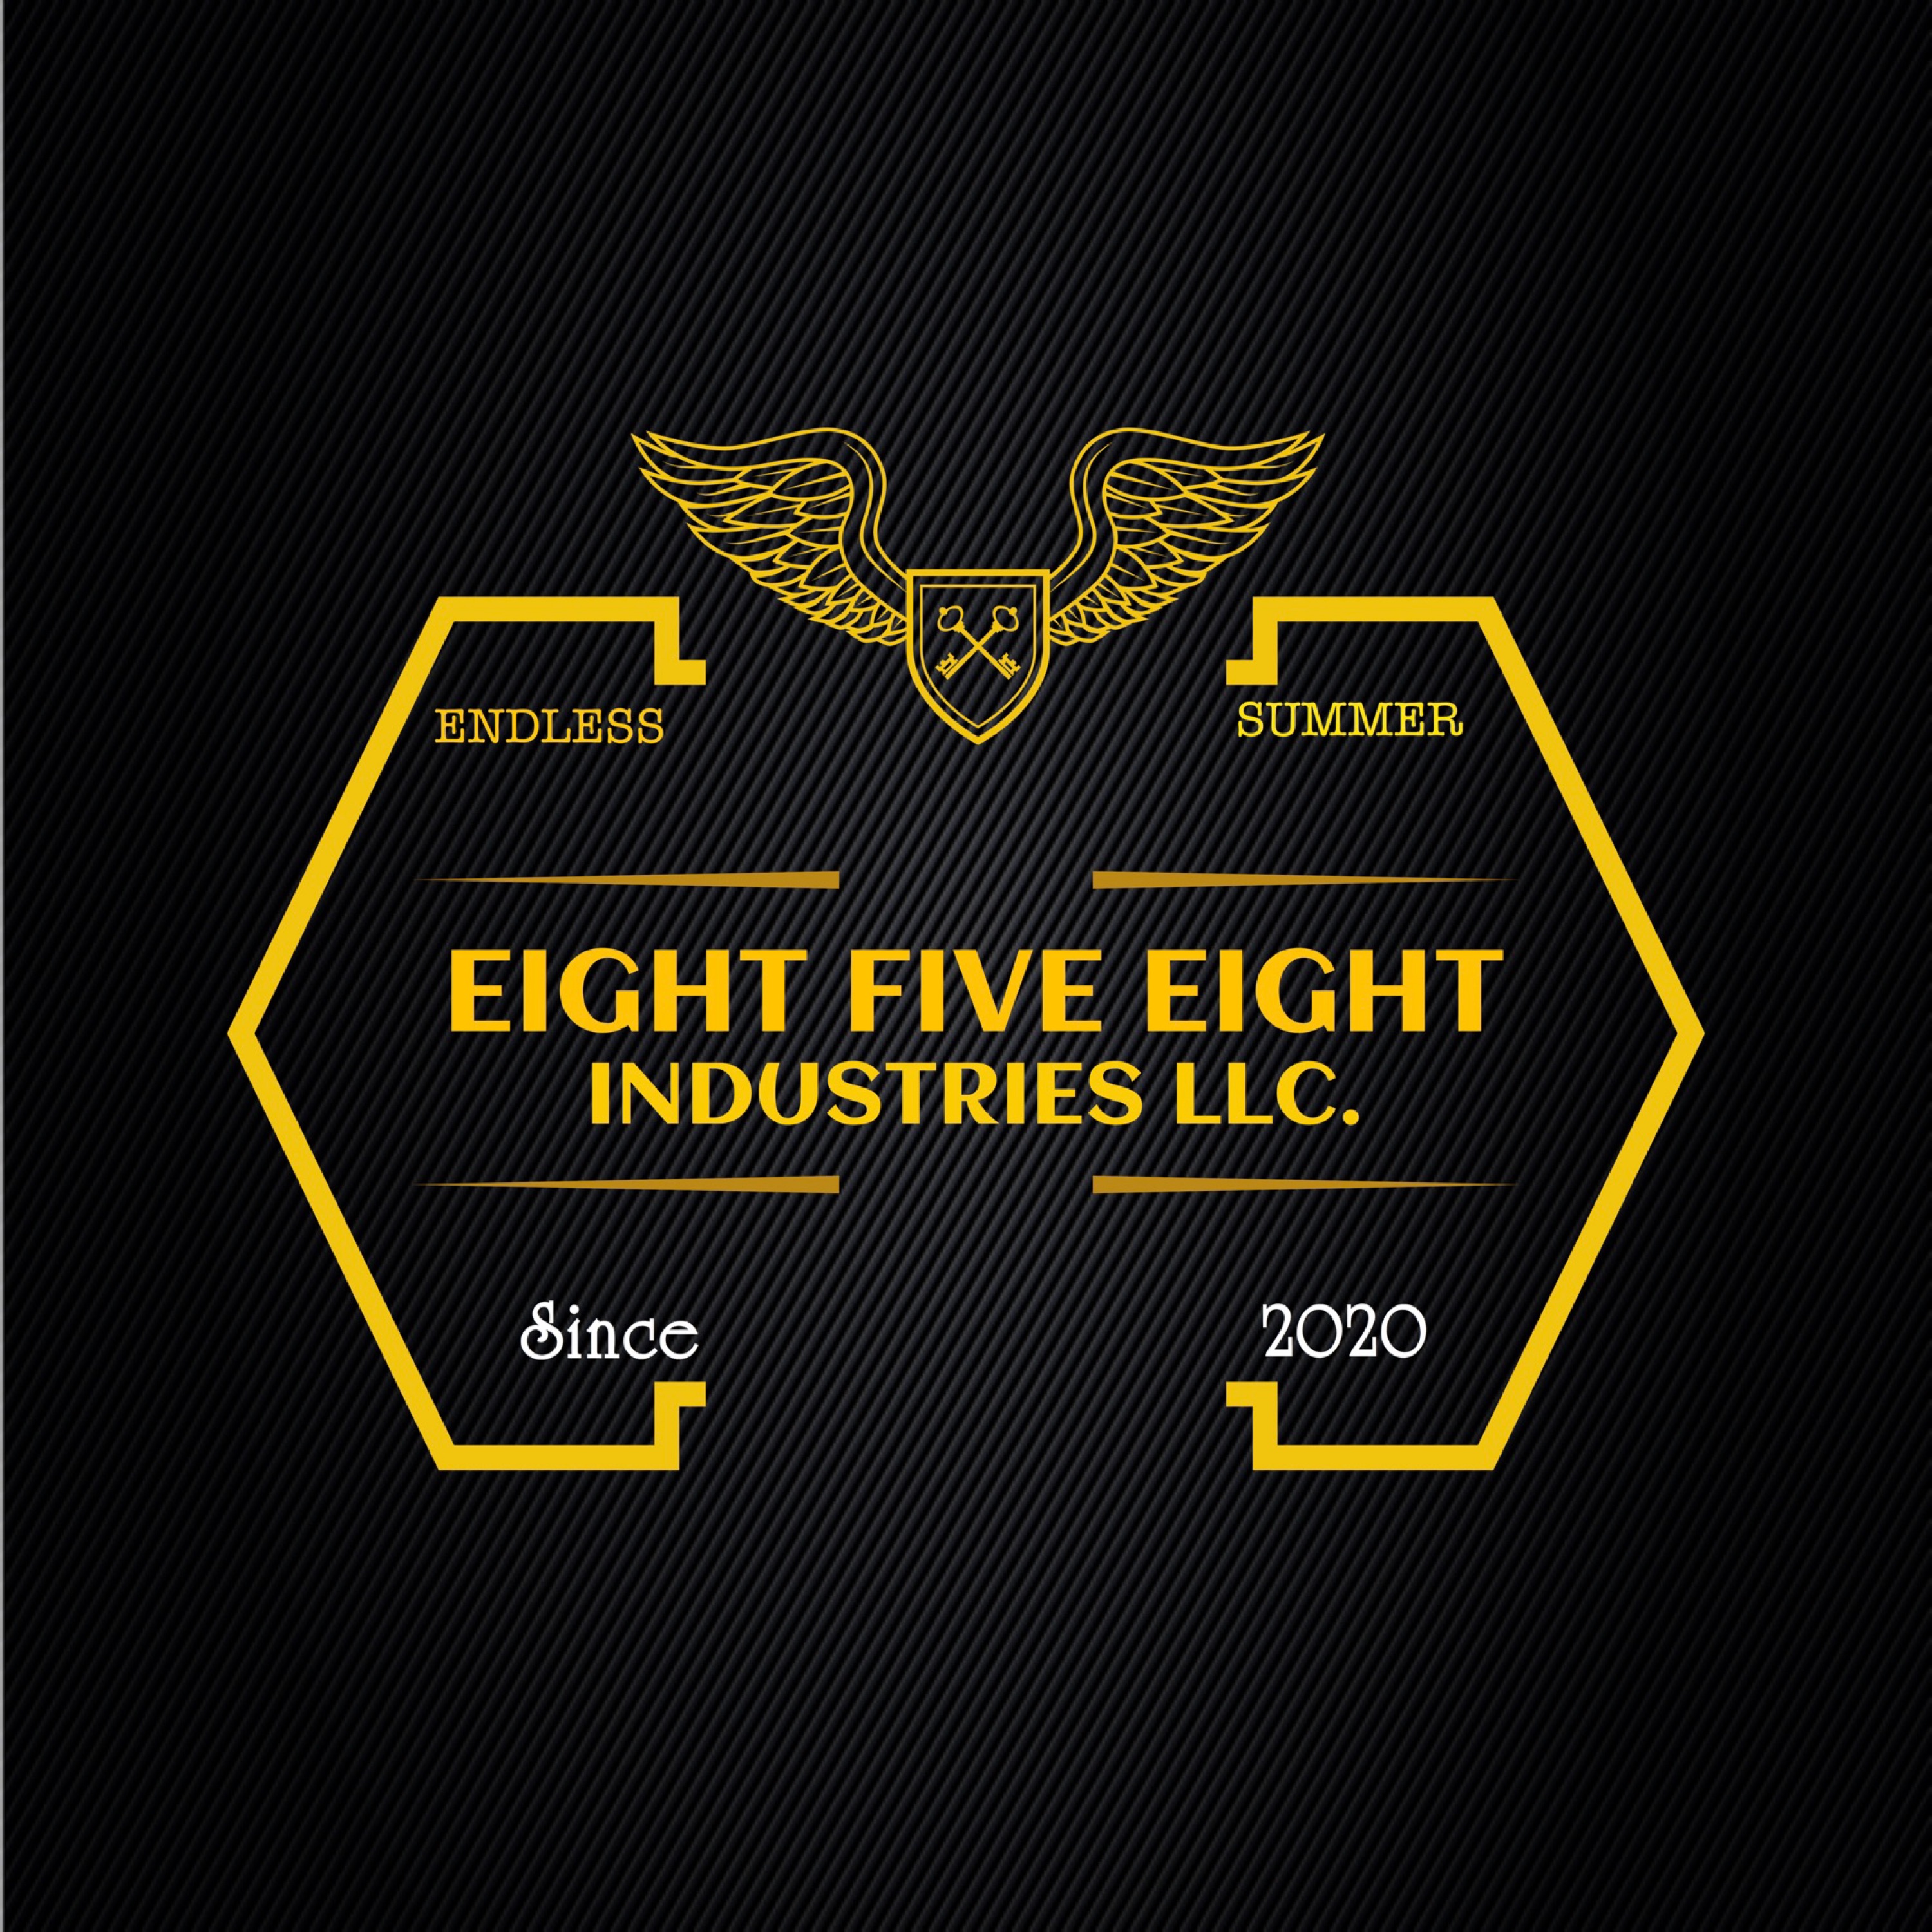 Eight Five Eight Industries -  Unlicensed Contractor Logo